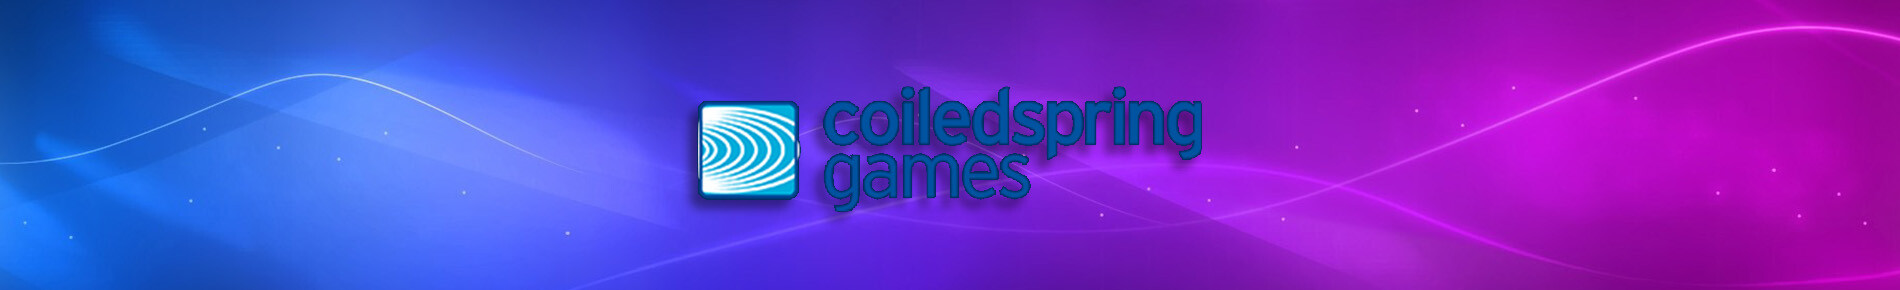 Coiledspring Games